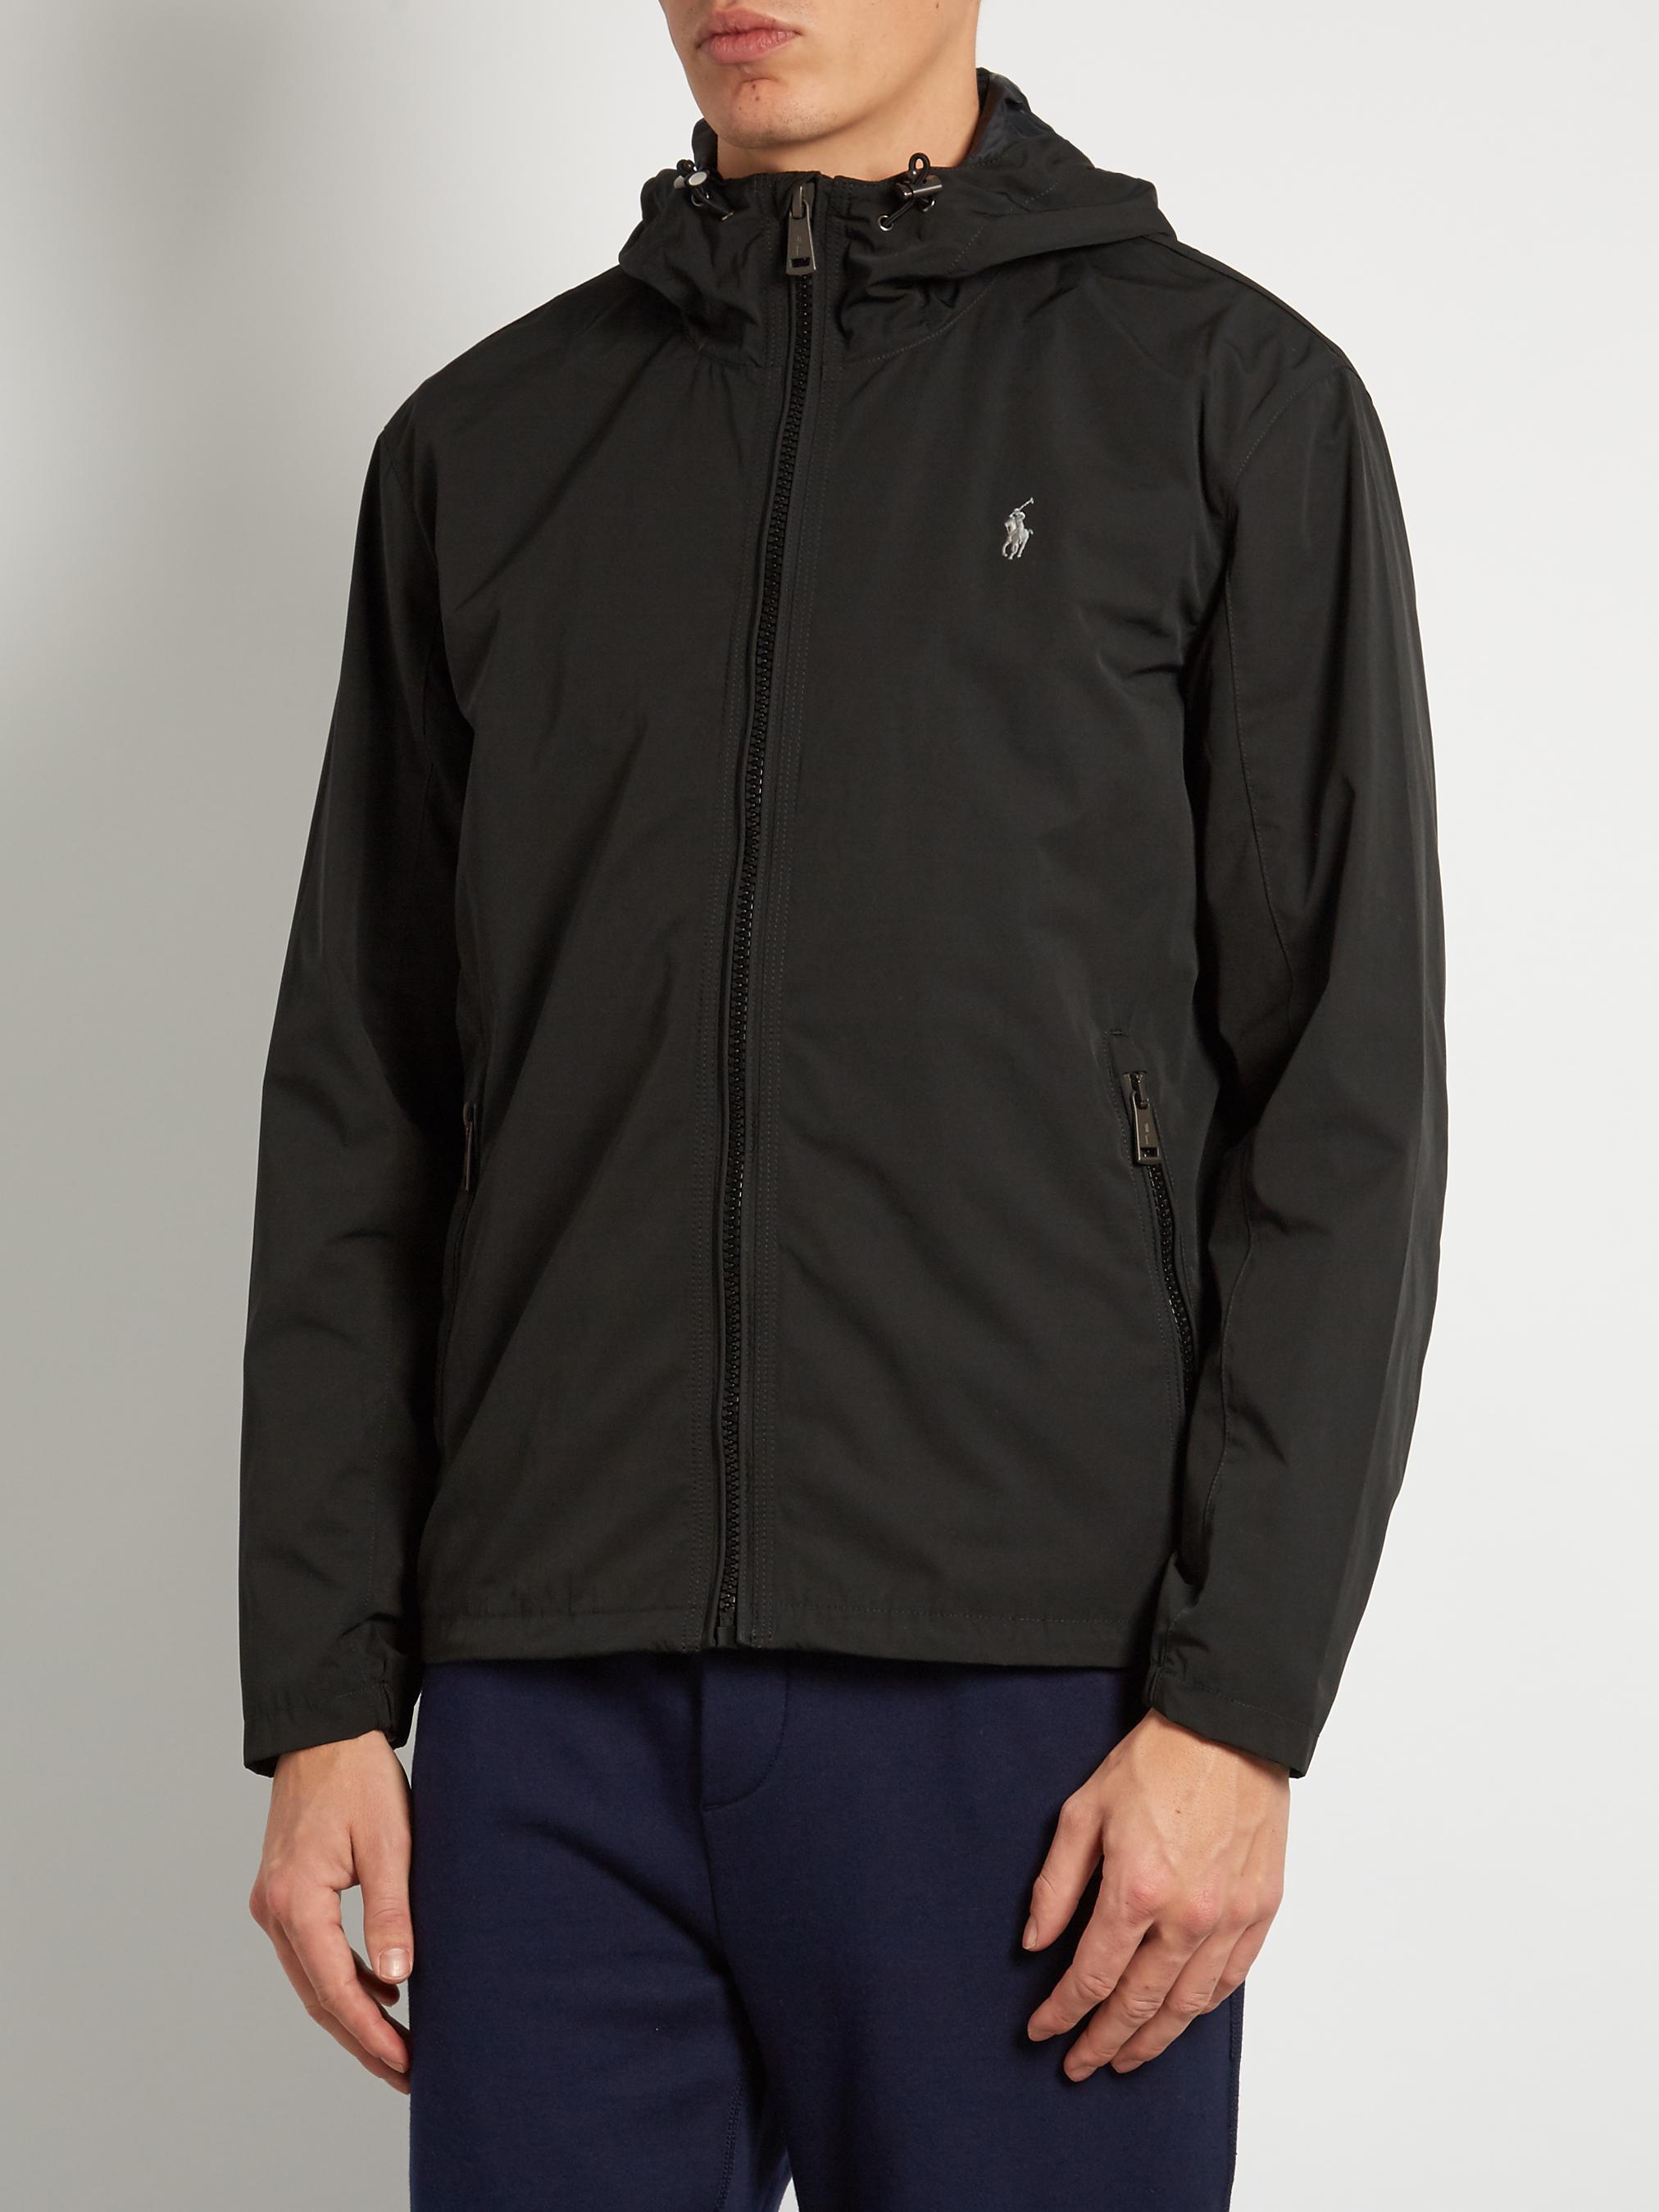 Lyst - Polo Ralph Lauren Water-resistant Nylon Hooded Jacket in Black